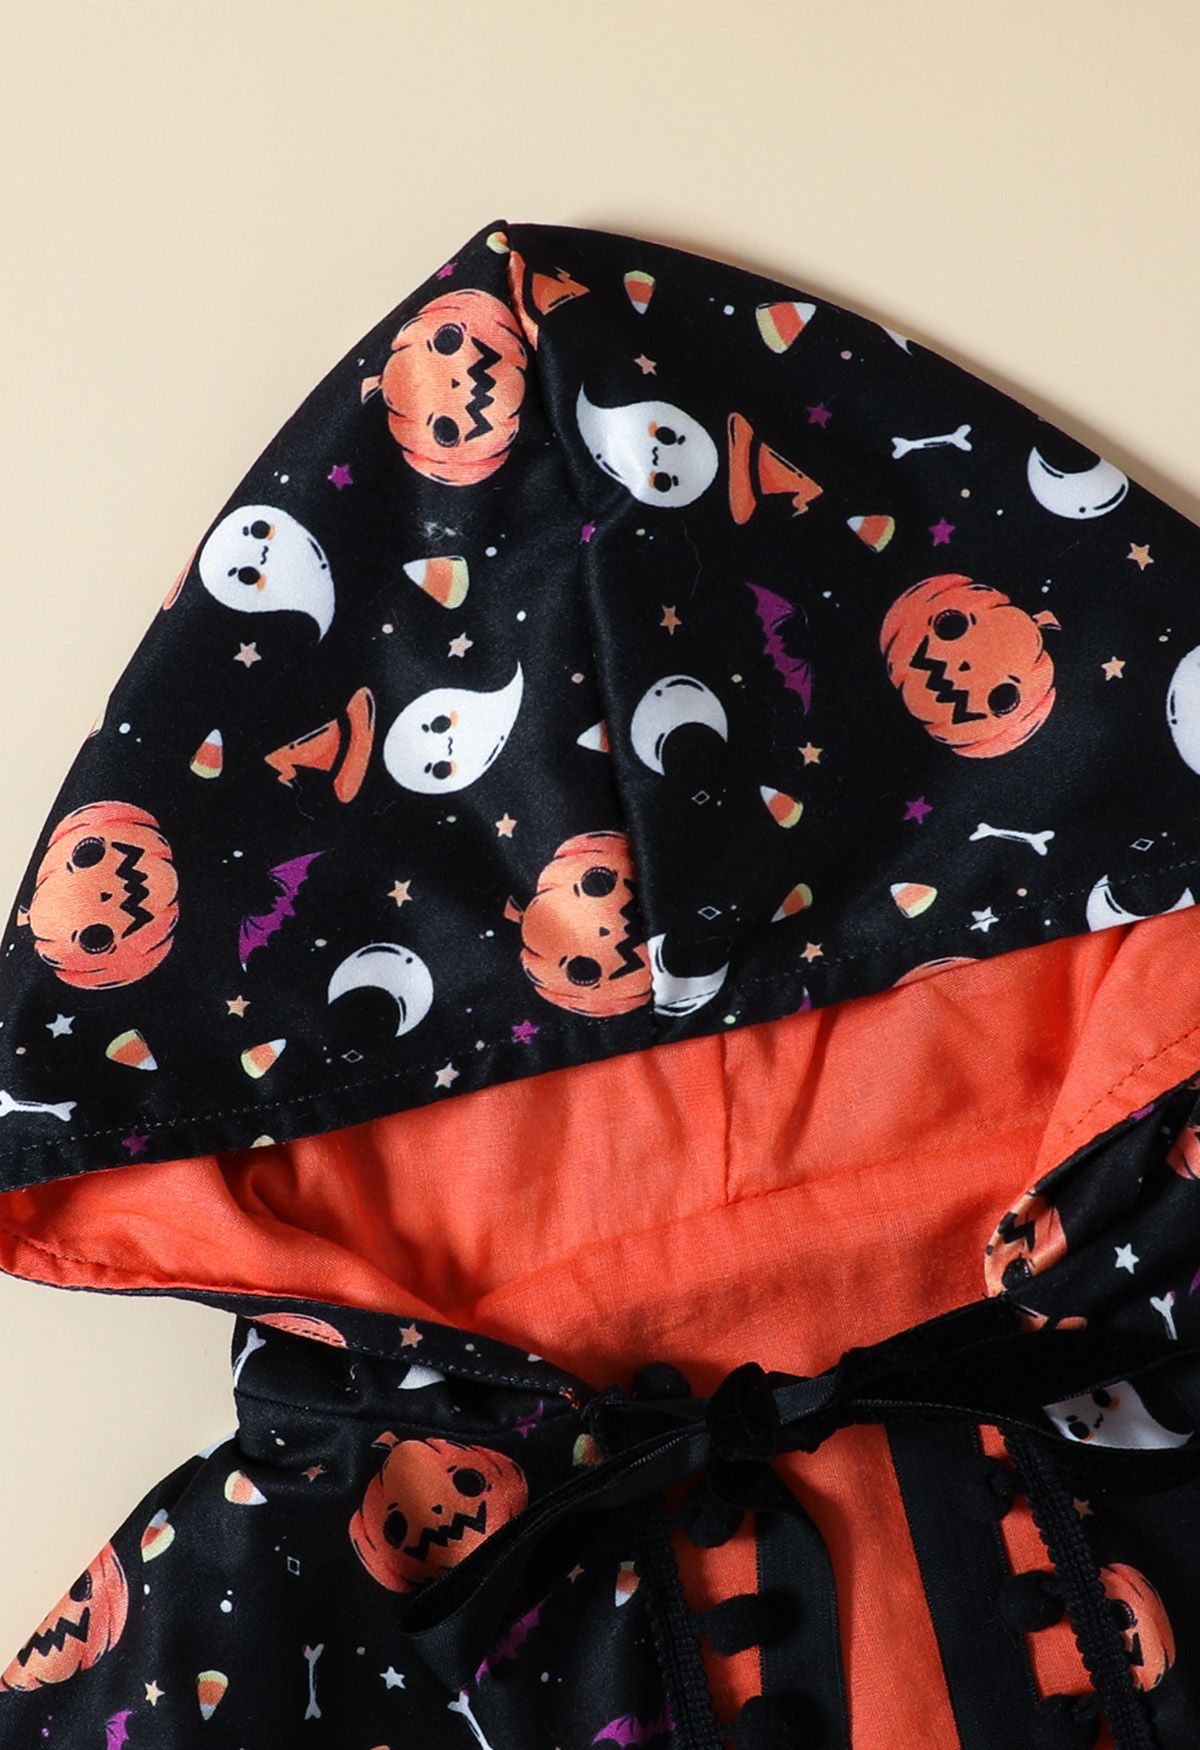 Kids' Halloween Ghost Pumpkin Mesh Dress with Hooded Cape 